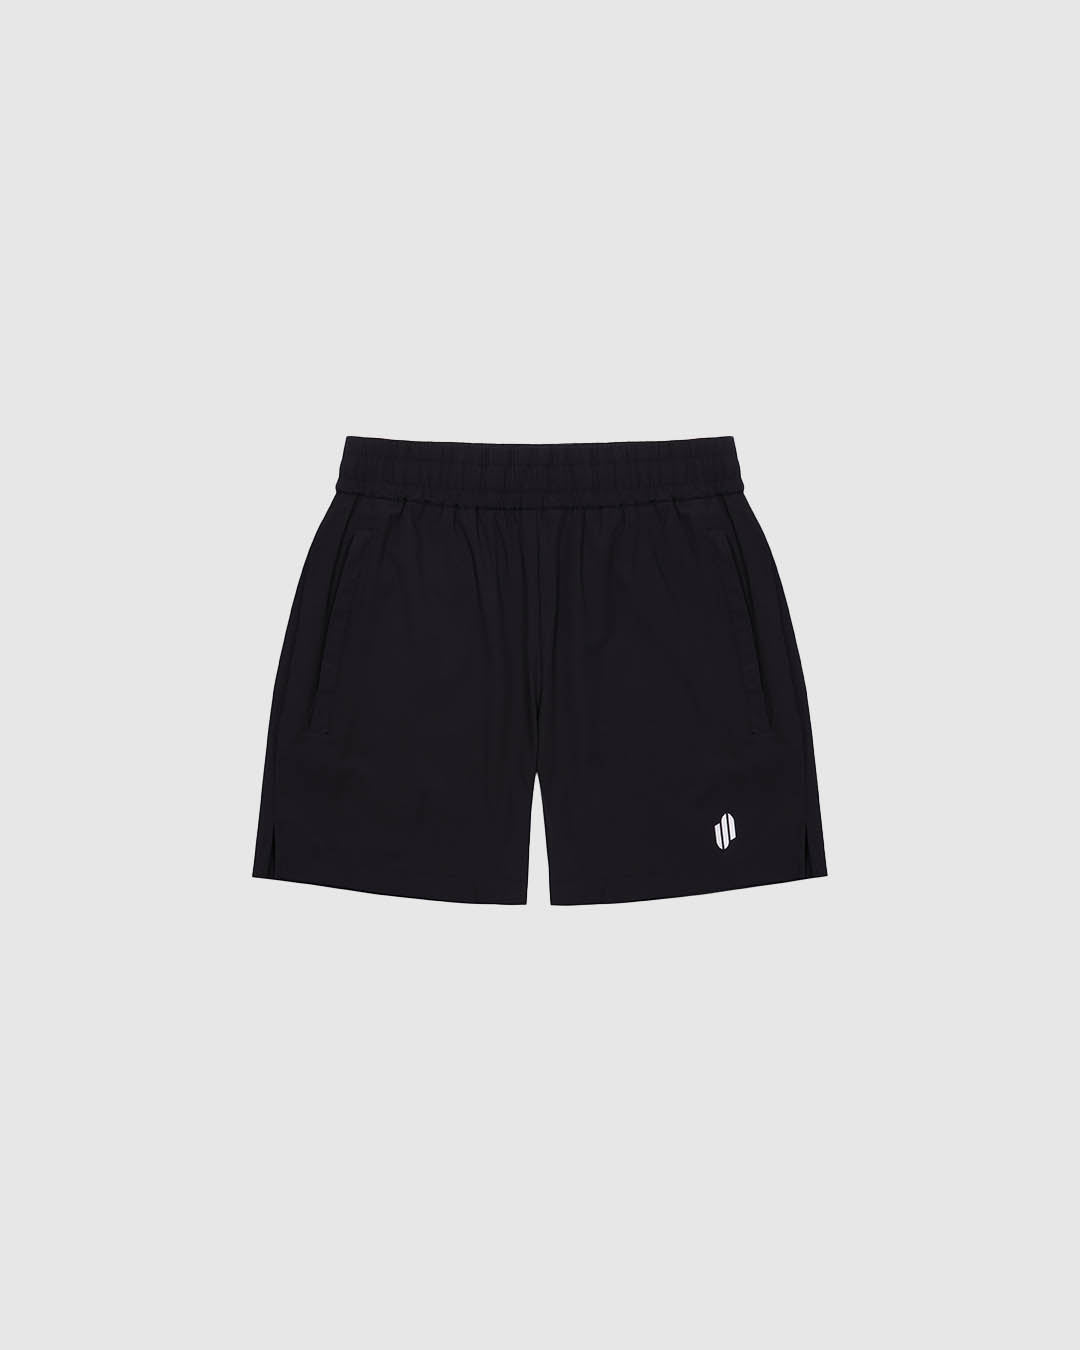 EE:S12 - Nylon Shorts - Black